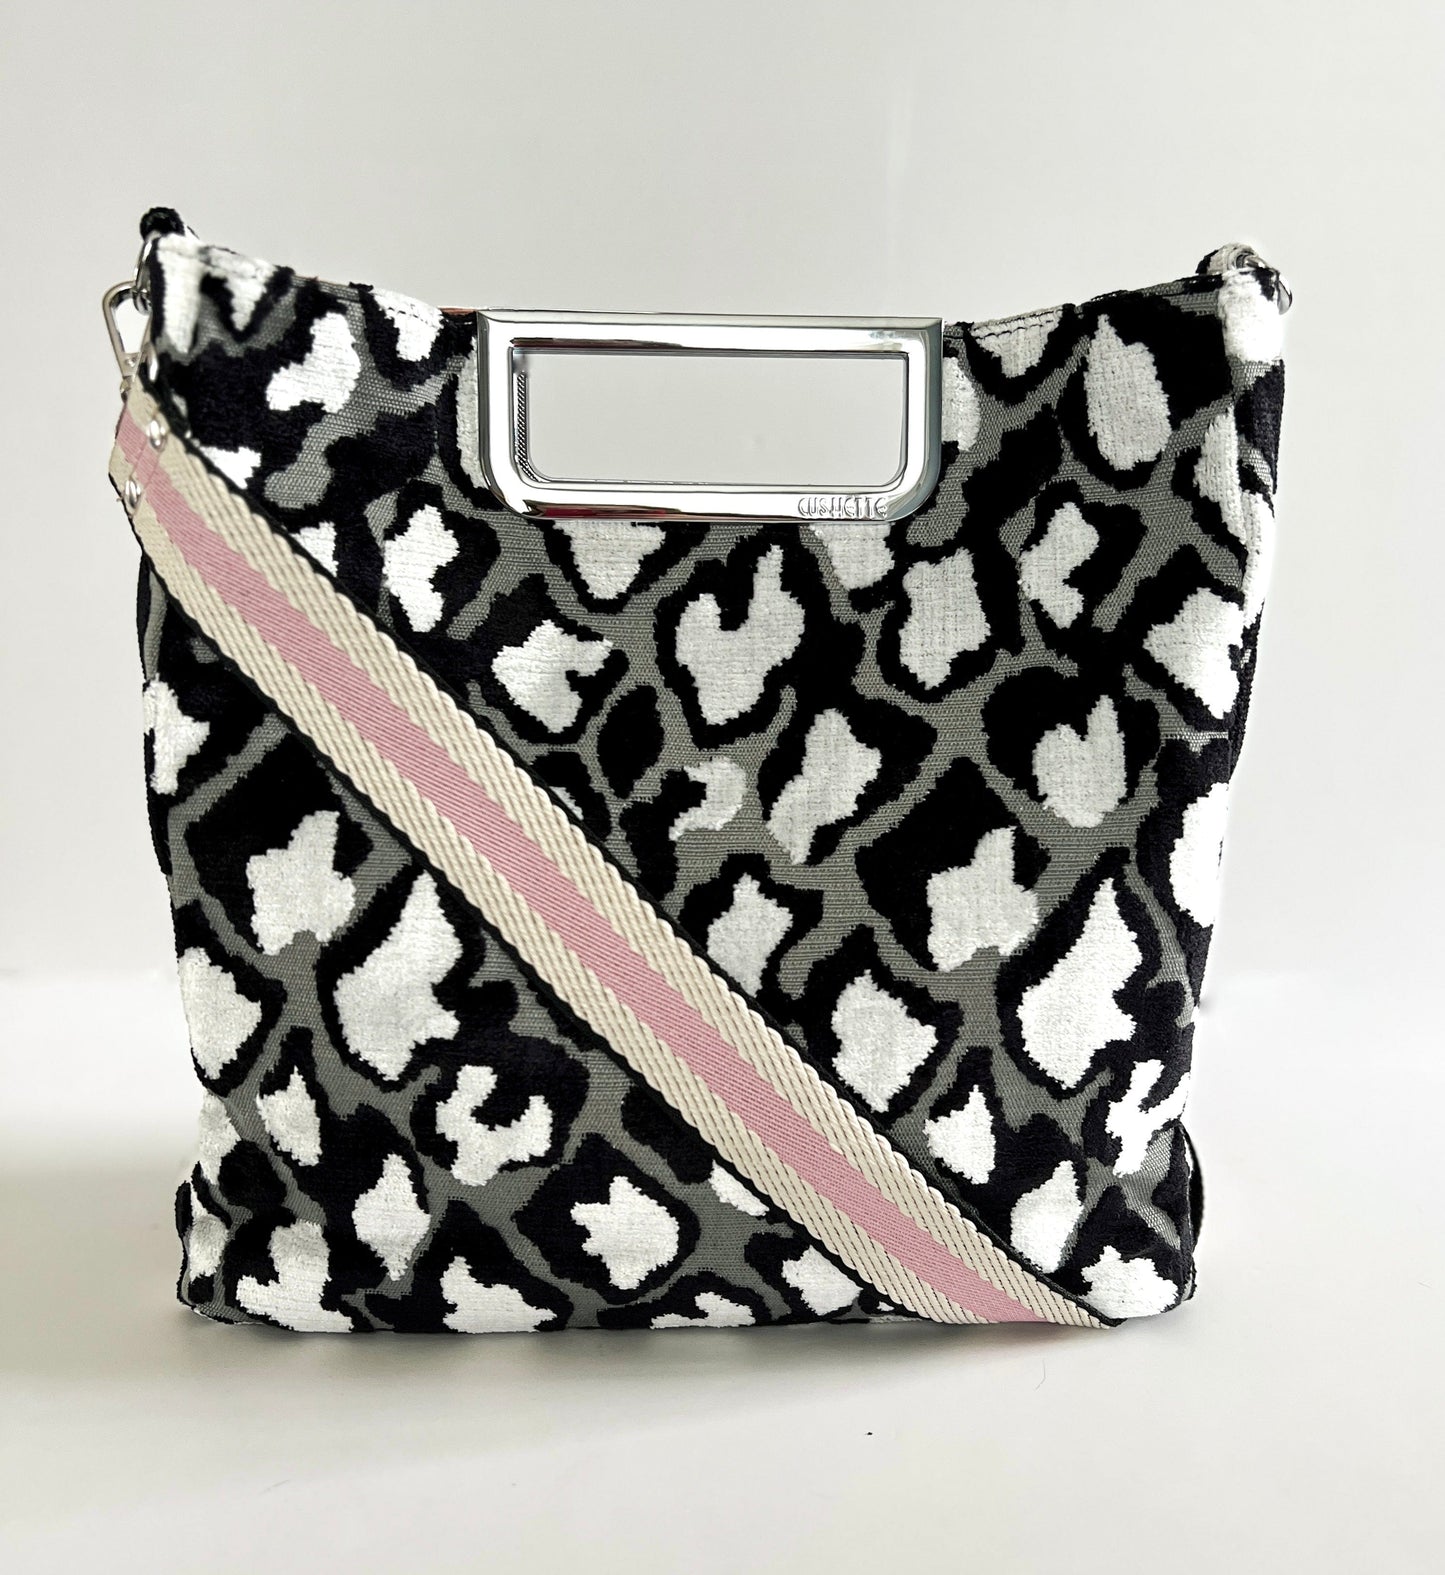 Black leopard Jane crossbody handbag - Shiny chrome hardware